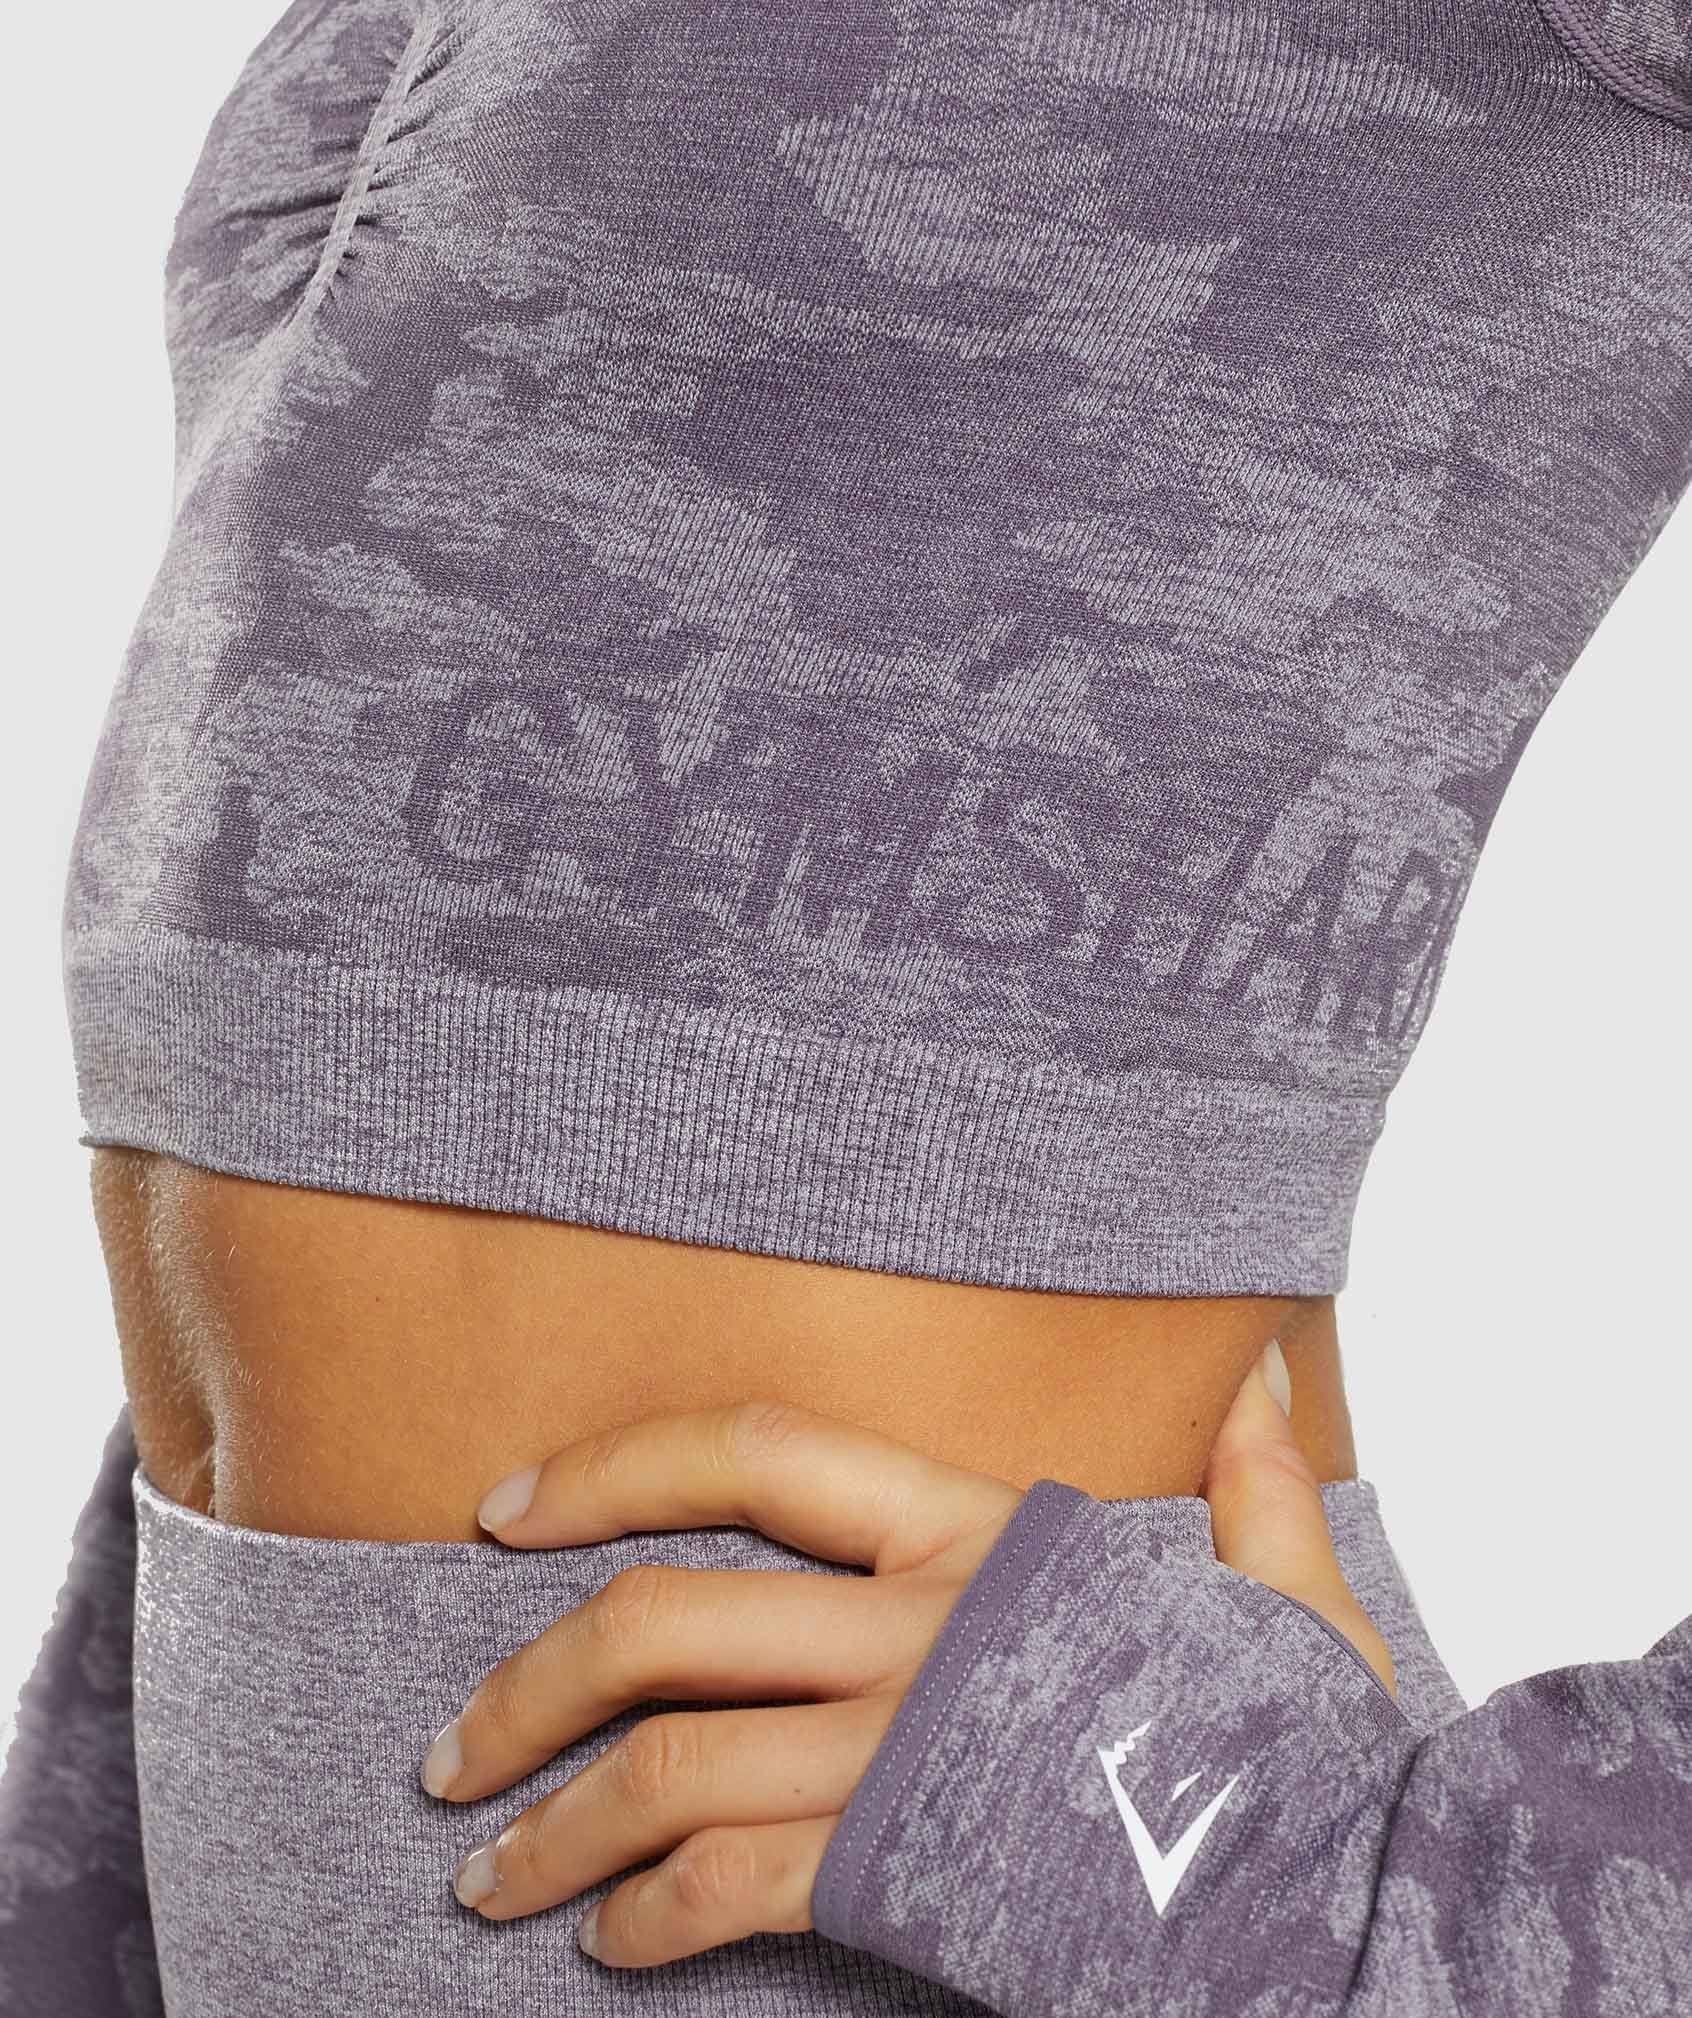 Camo Seamless Long Sleeve Crop Top in Lavender Grey